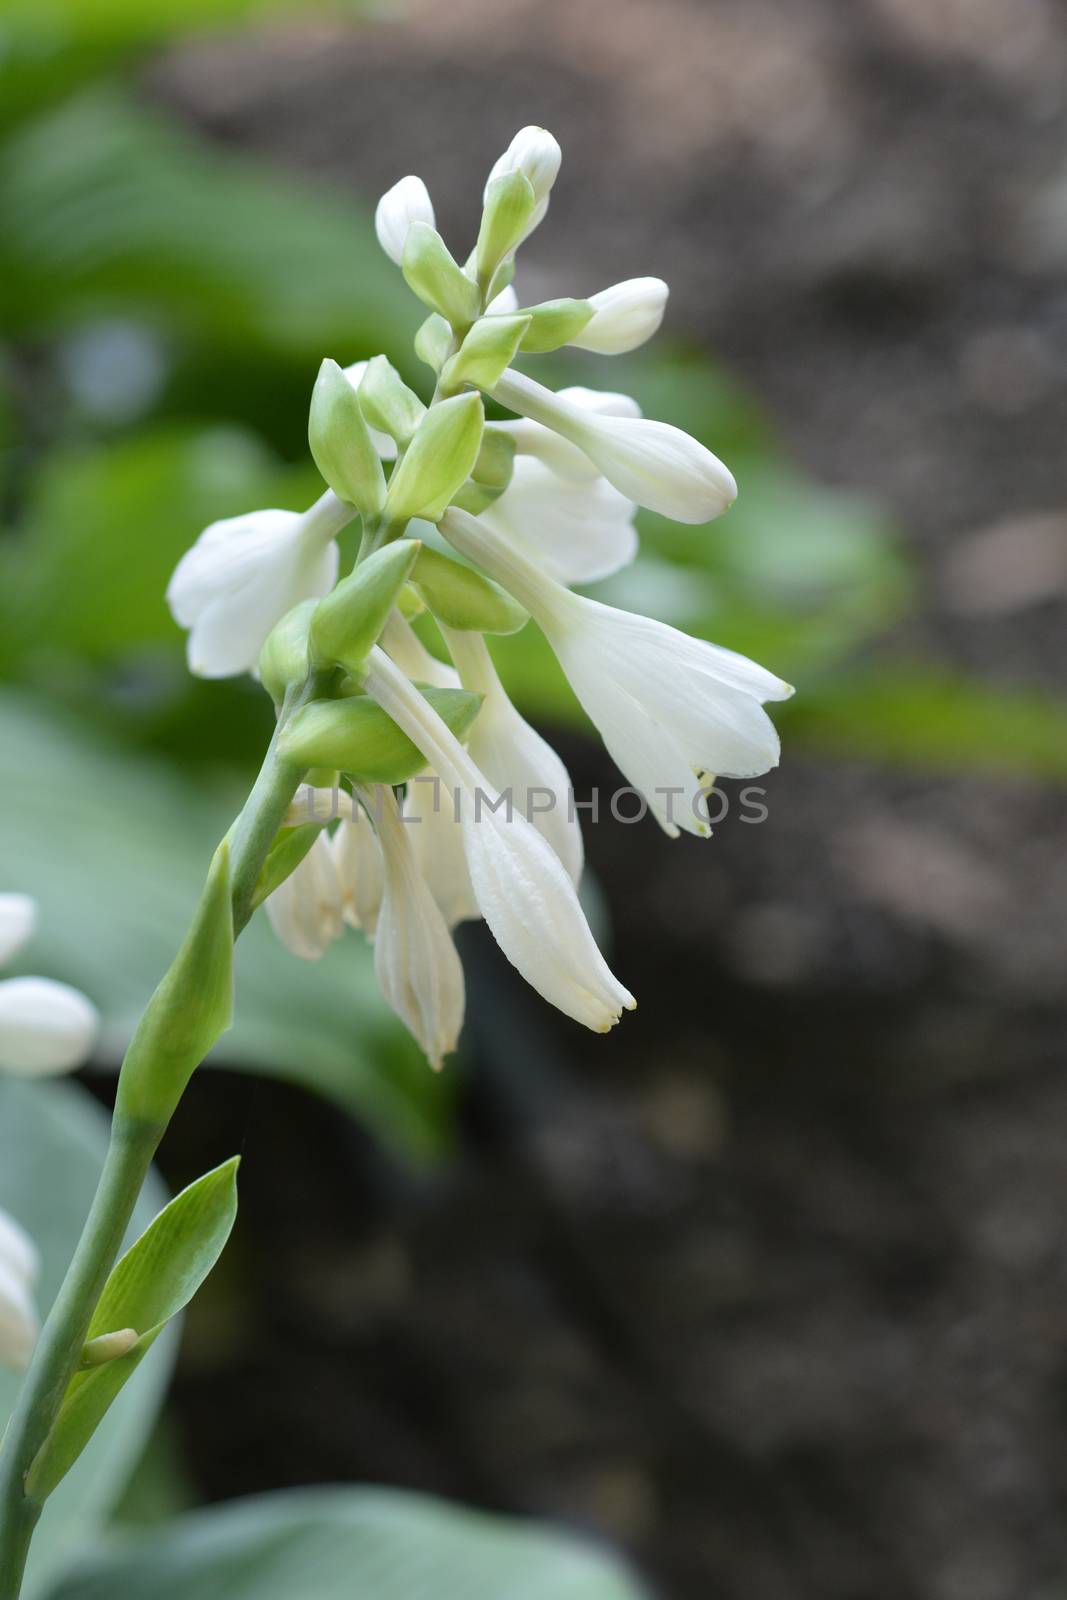 Plantain lily Frances Williams - Latin name - Hosta sieboldiana Frances Williams